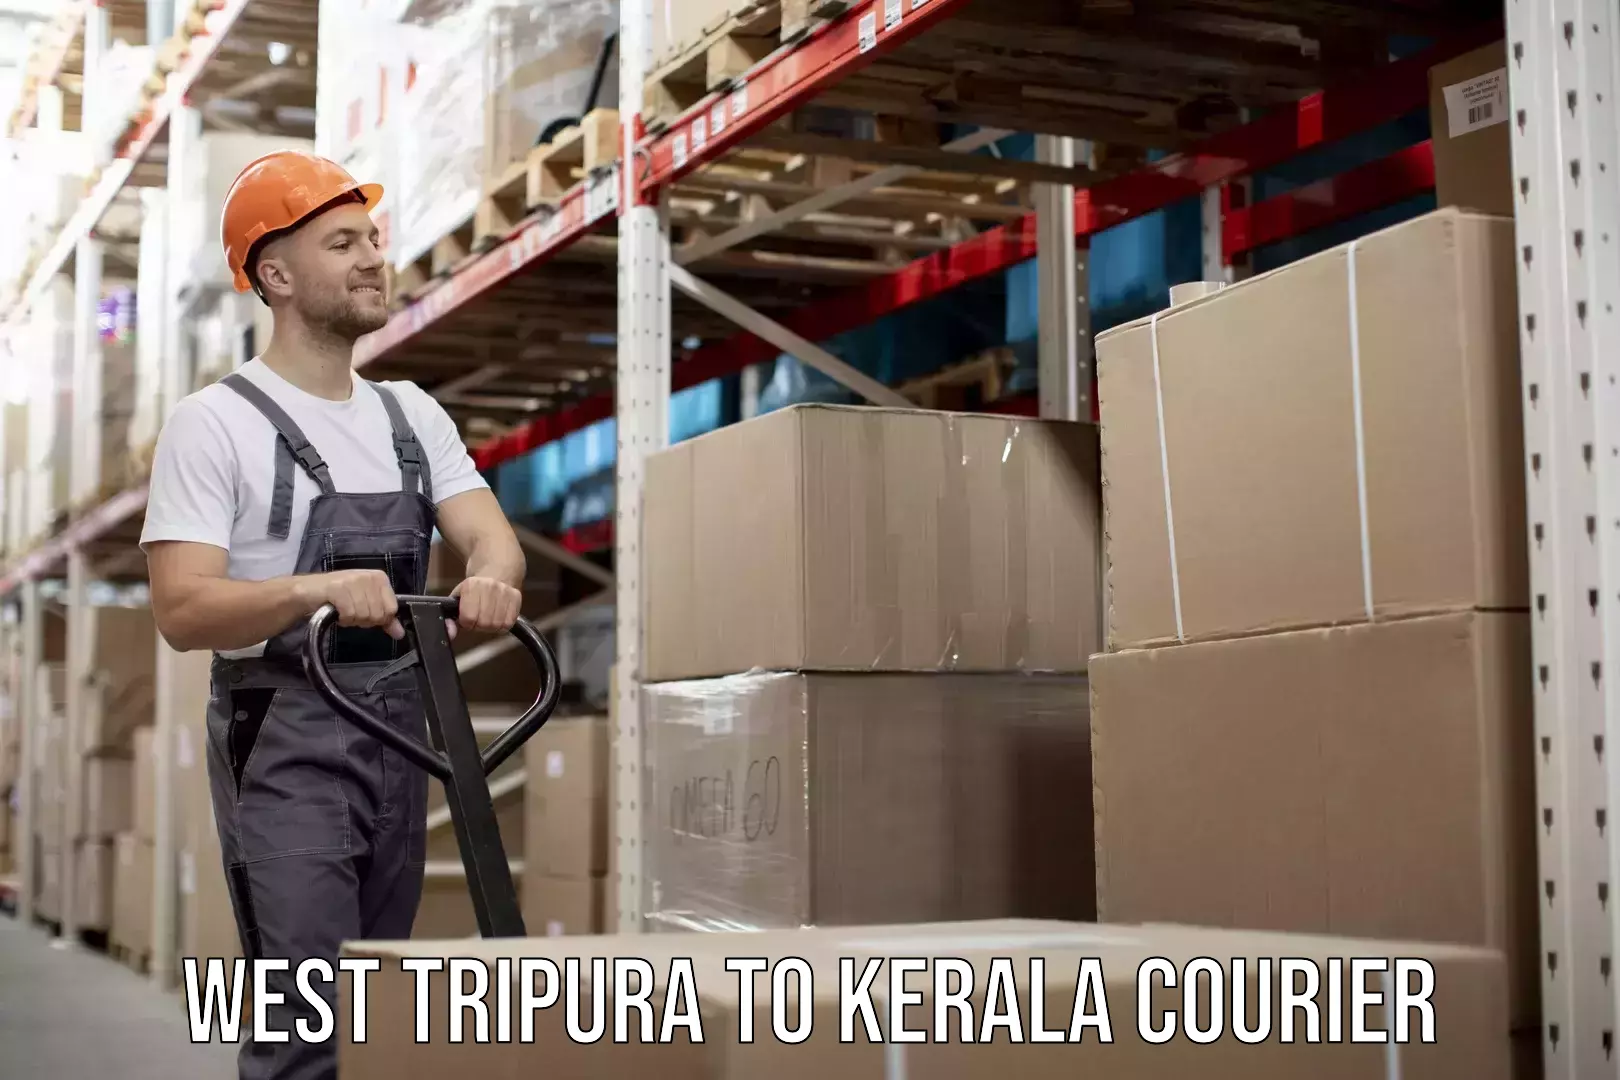 Digital courier platforms West Tripura to Kerala